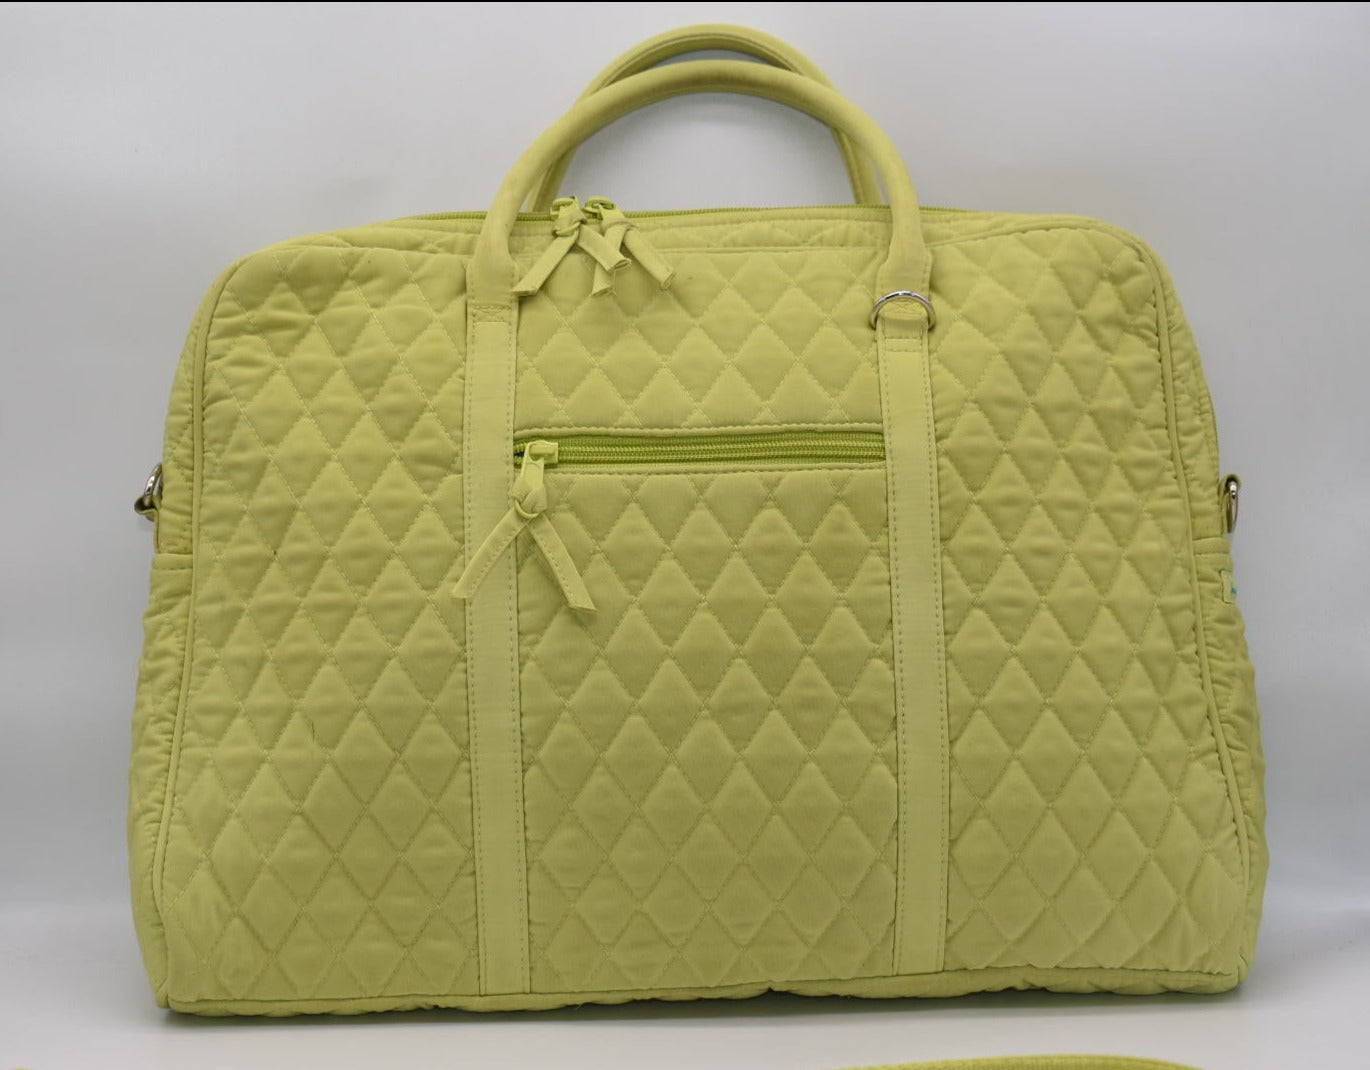 Vera Bradley Laptop Briefcase Bag in Microfiber Key Lime